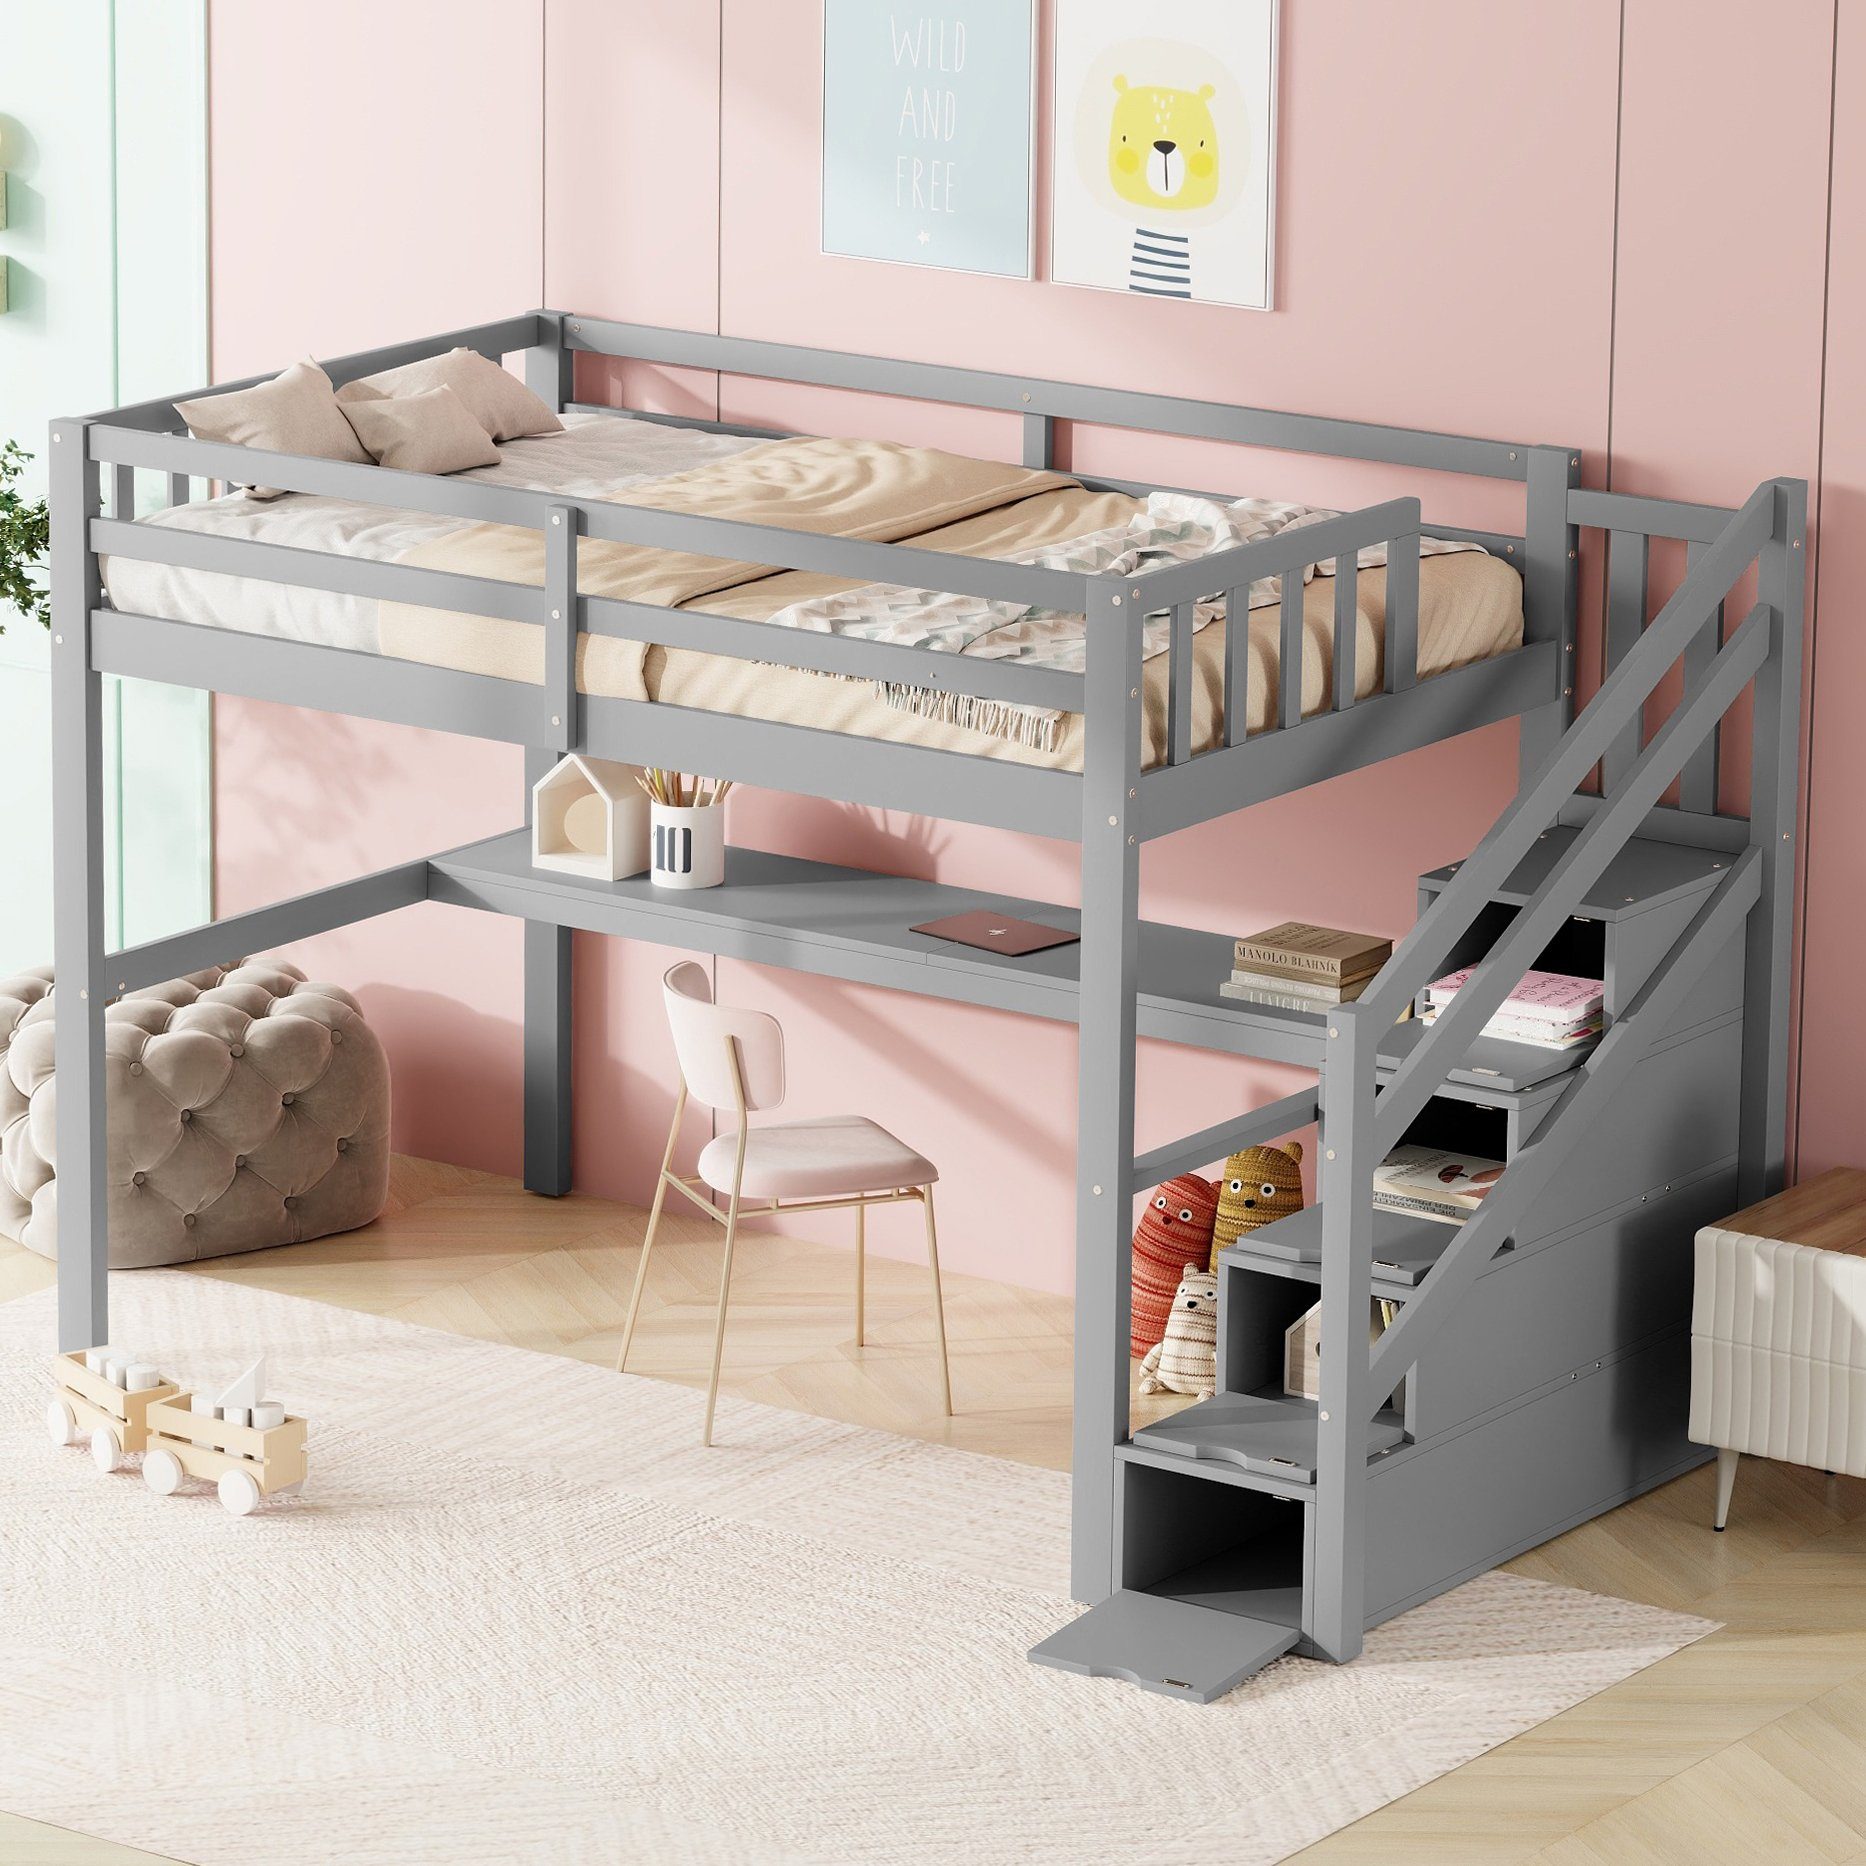 SOFTWEARY Hochbett Einzelbett mit Lattenrost (90x200 cm) Holzbett aus Kiefer, Kinderbett inkl. Rausfallschutz grau